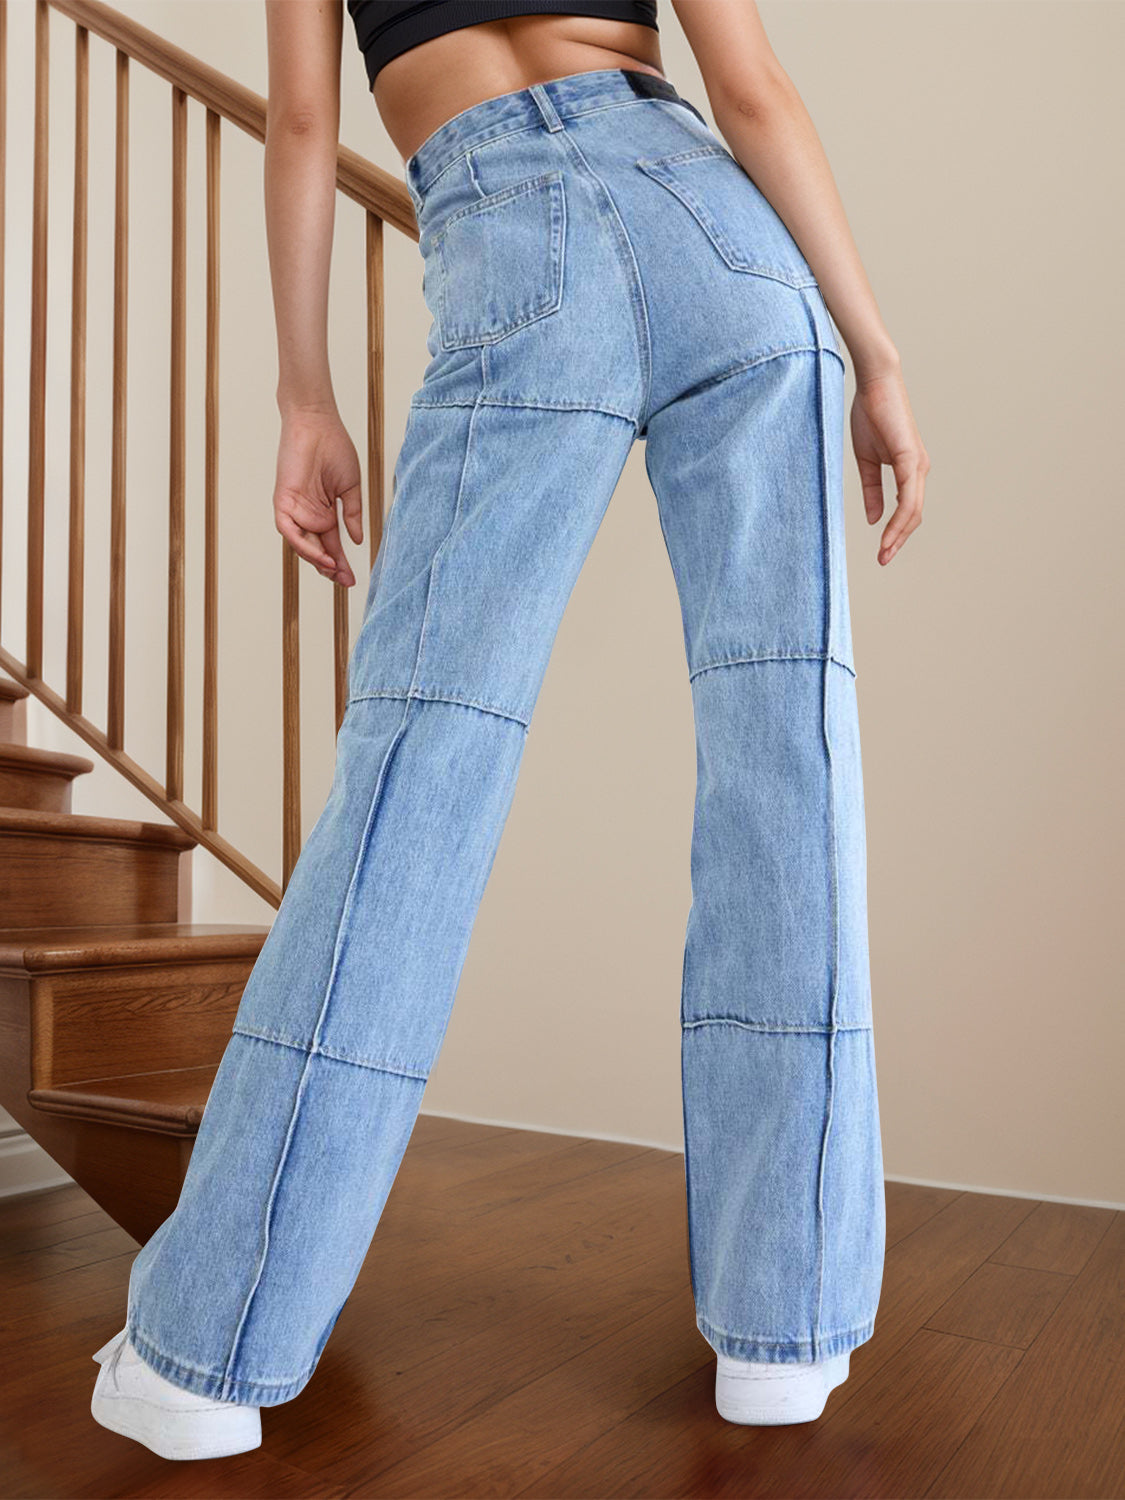 FZ Women's High Waist Straight Denim Pants with Pockets